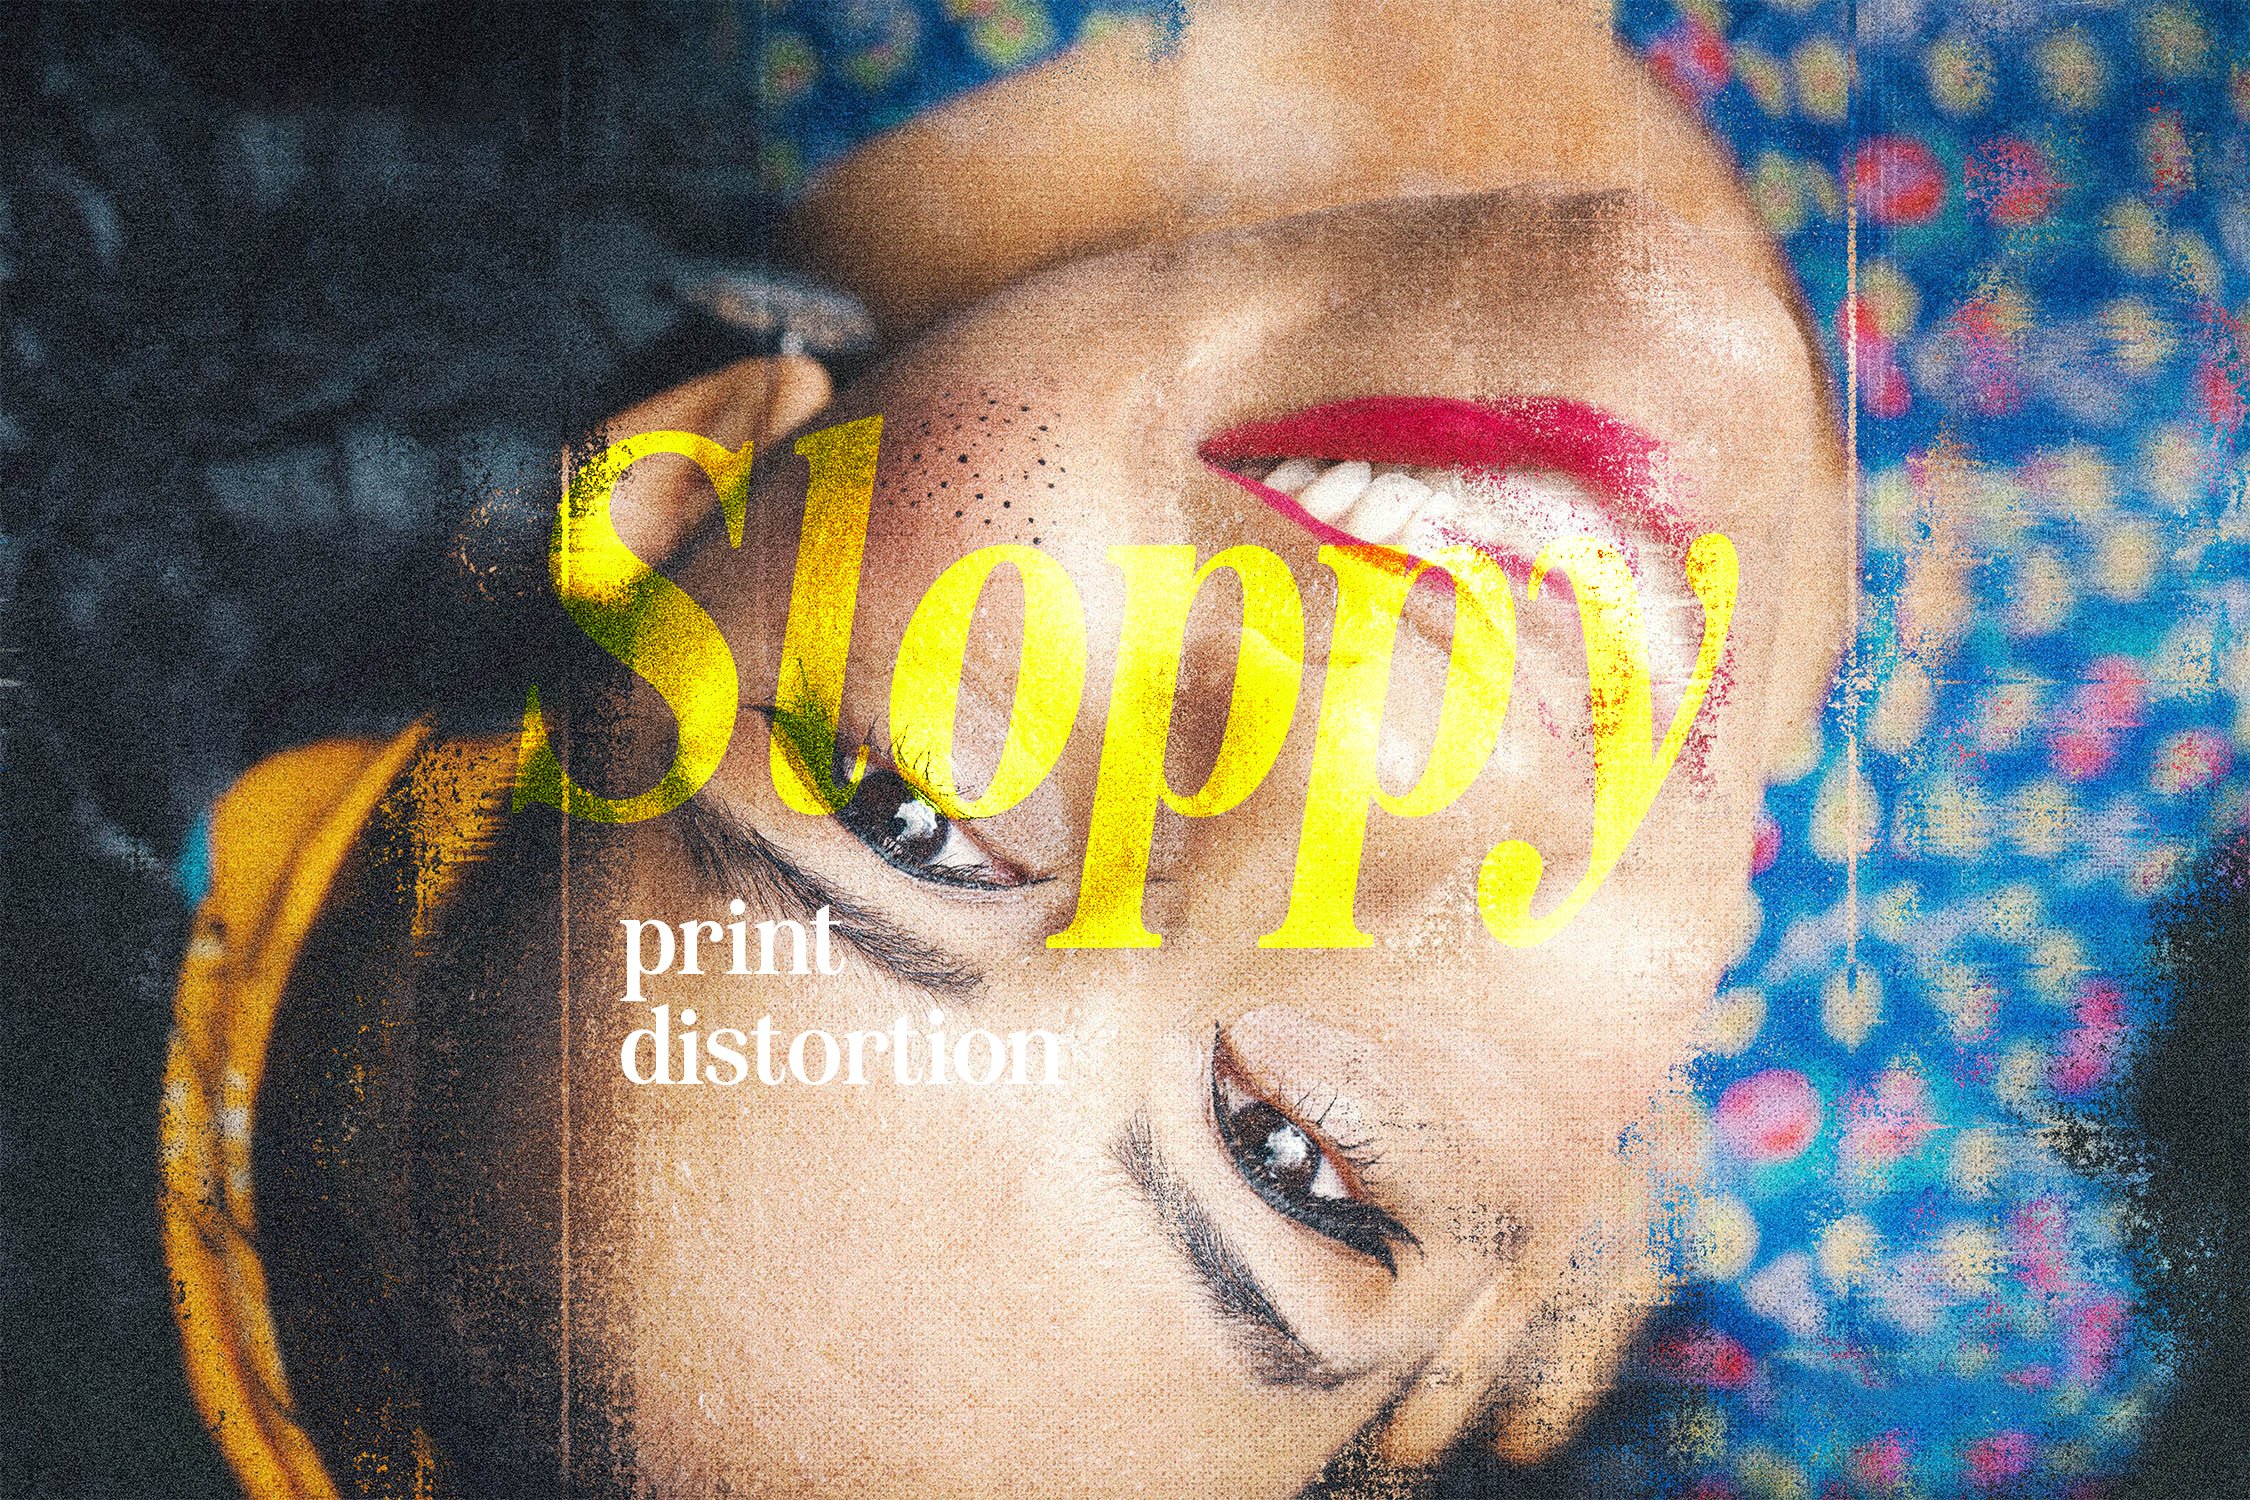 Sloppy Print Distortioncover image.